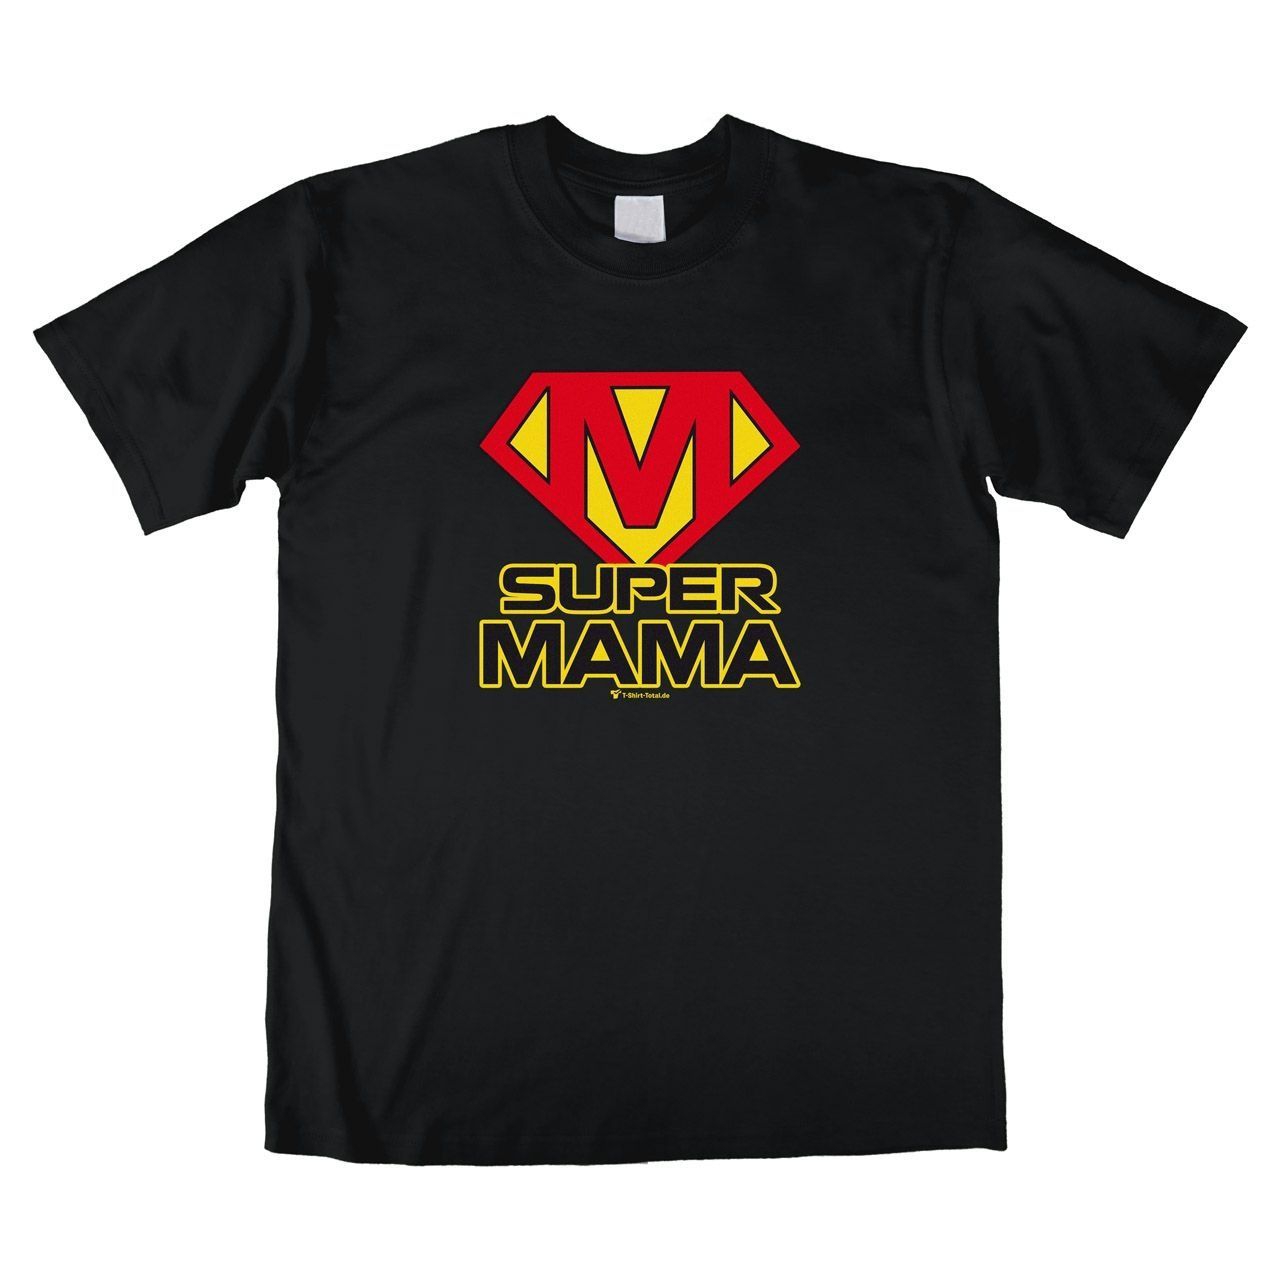 Super Mama Unisex T-Shirt schwarz Small